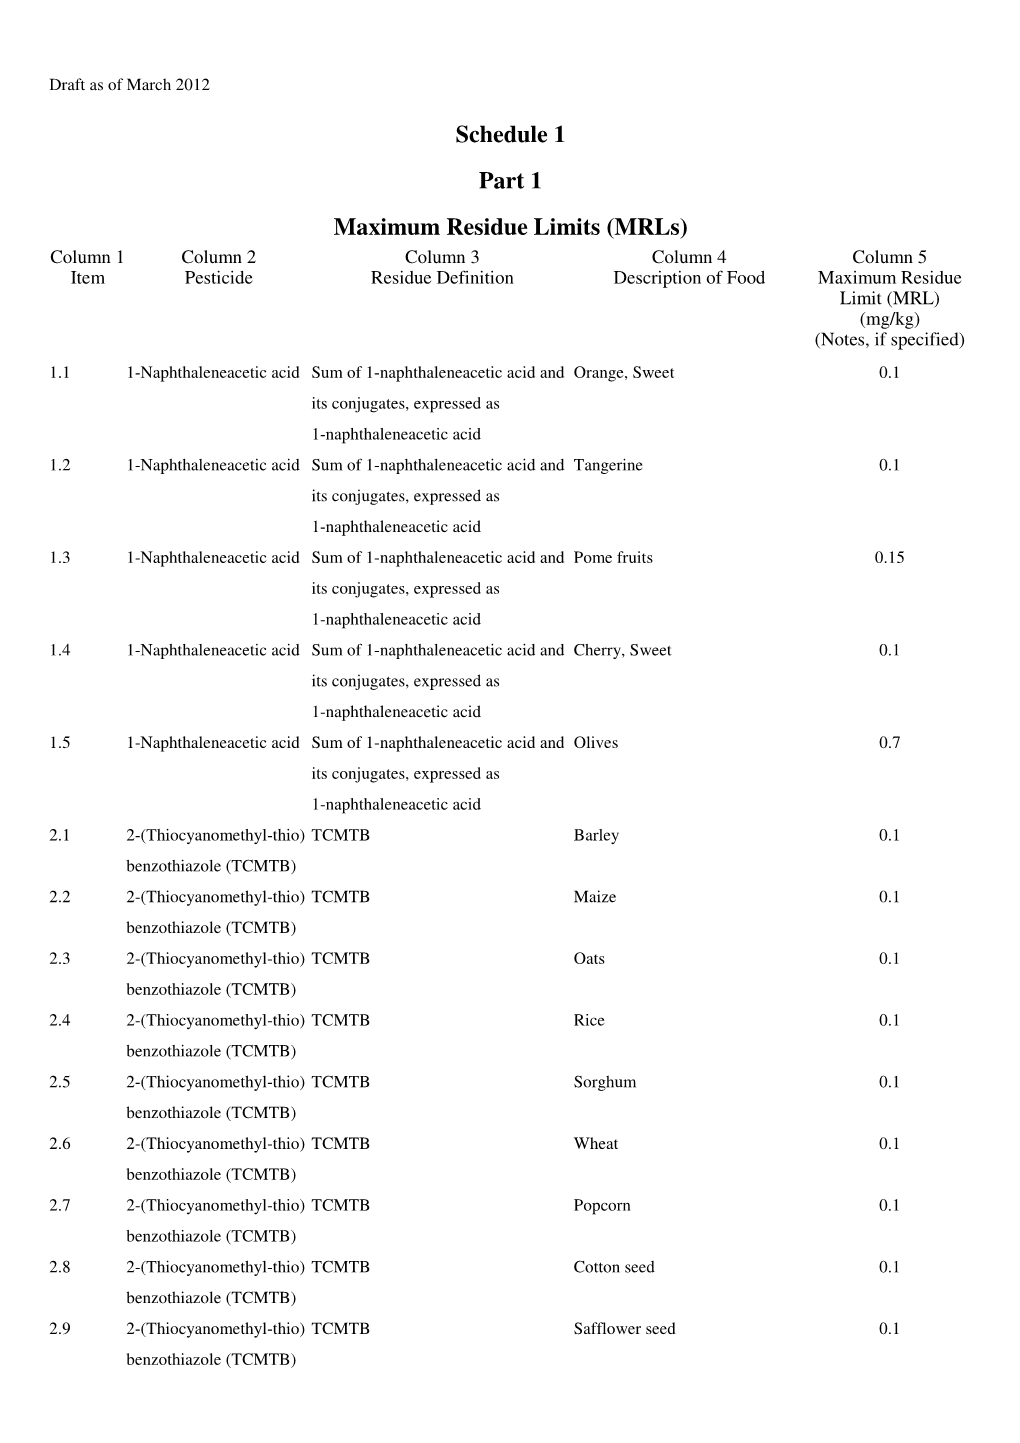 Schedule 1 Part 1 Maximum Residue Limits (Mrls)